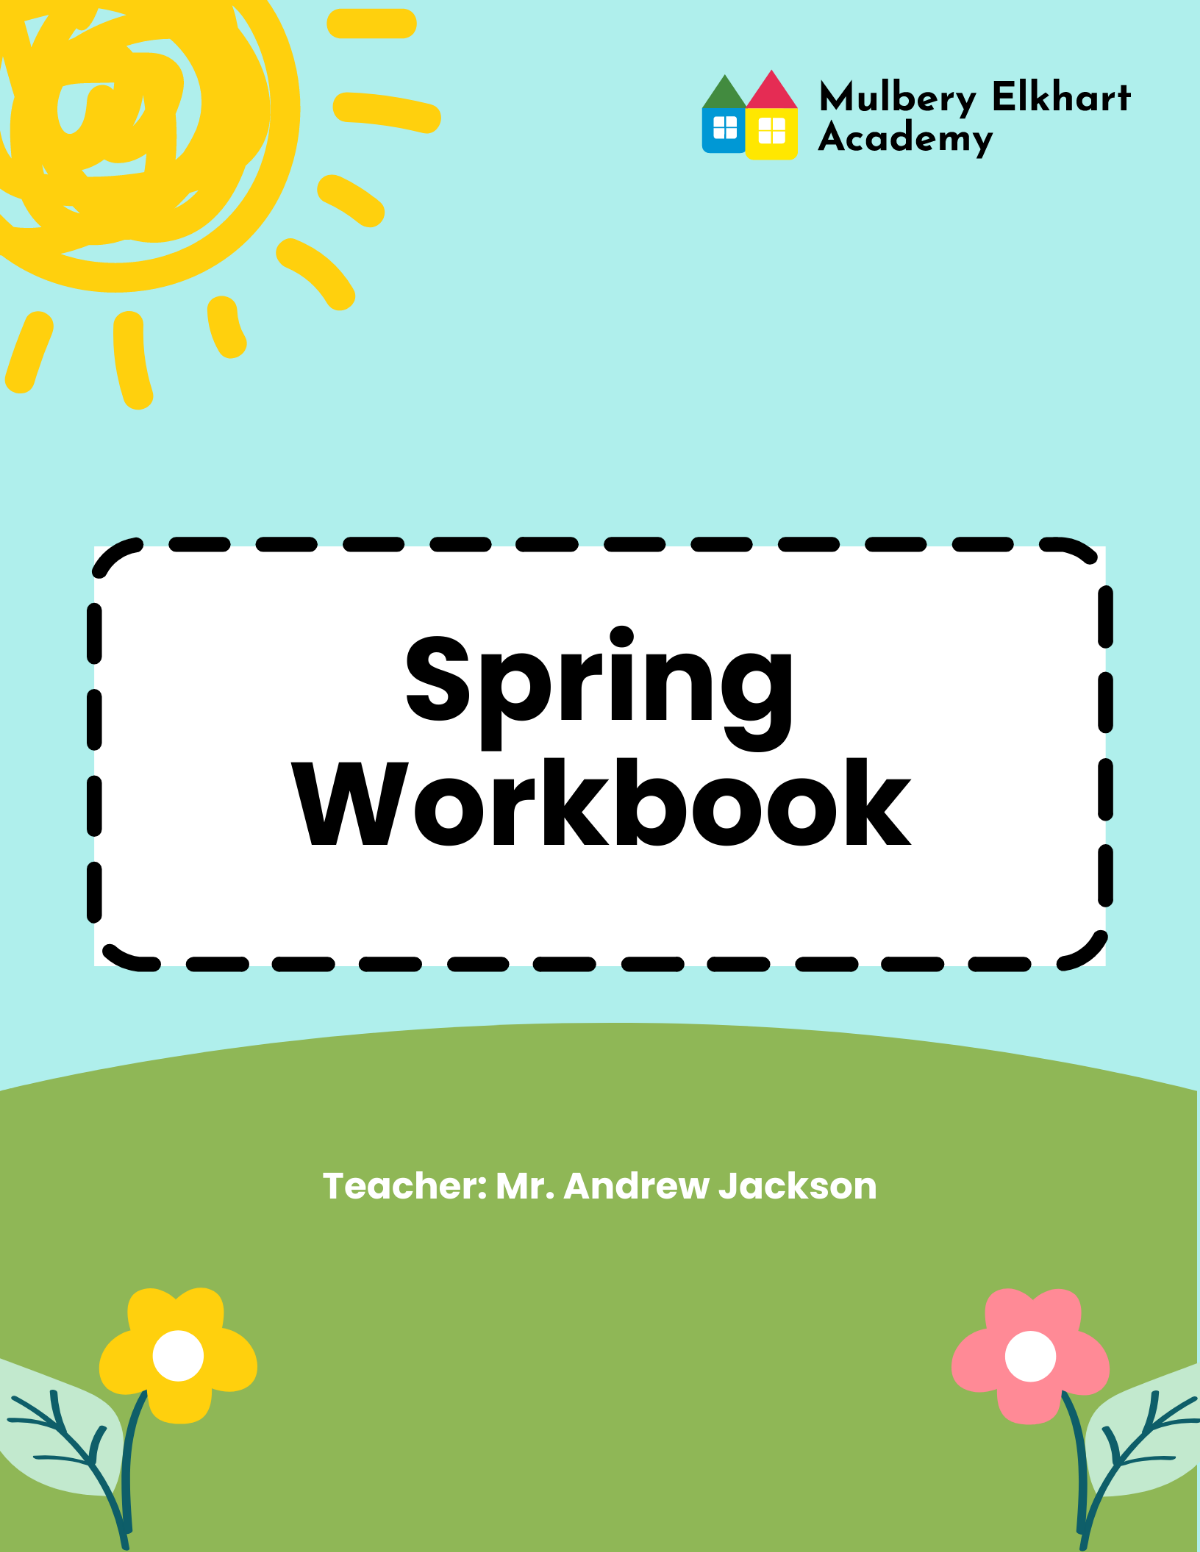 Spring Workbook Template